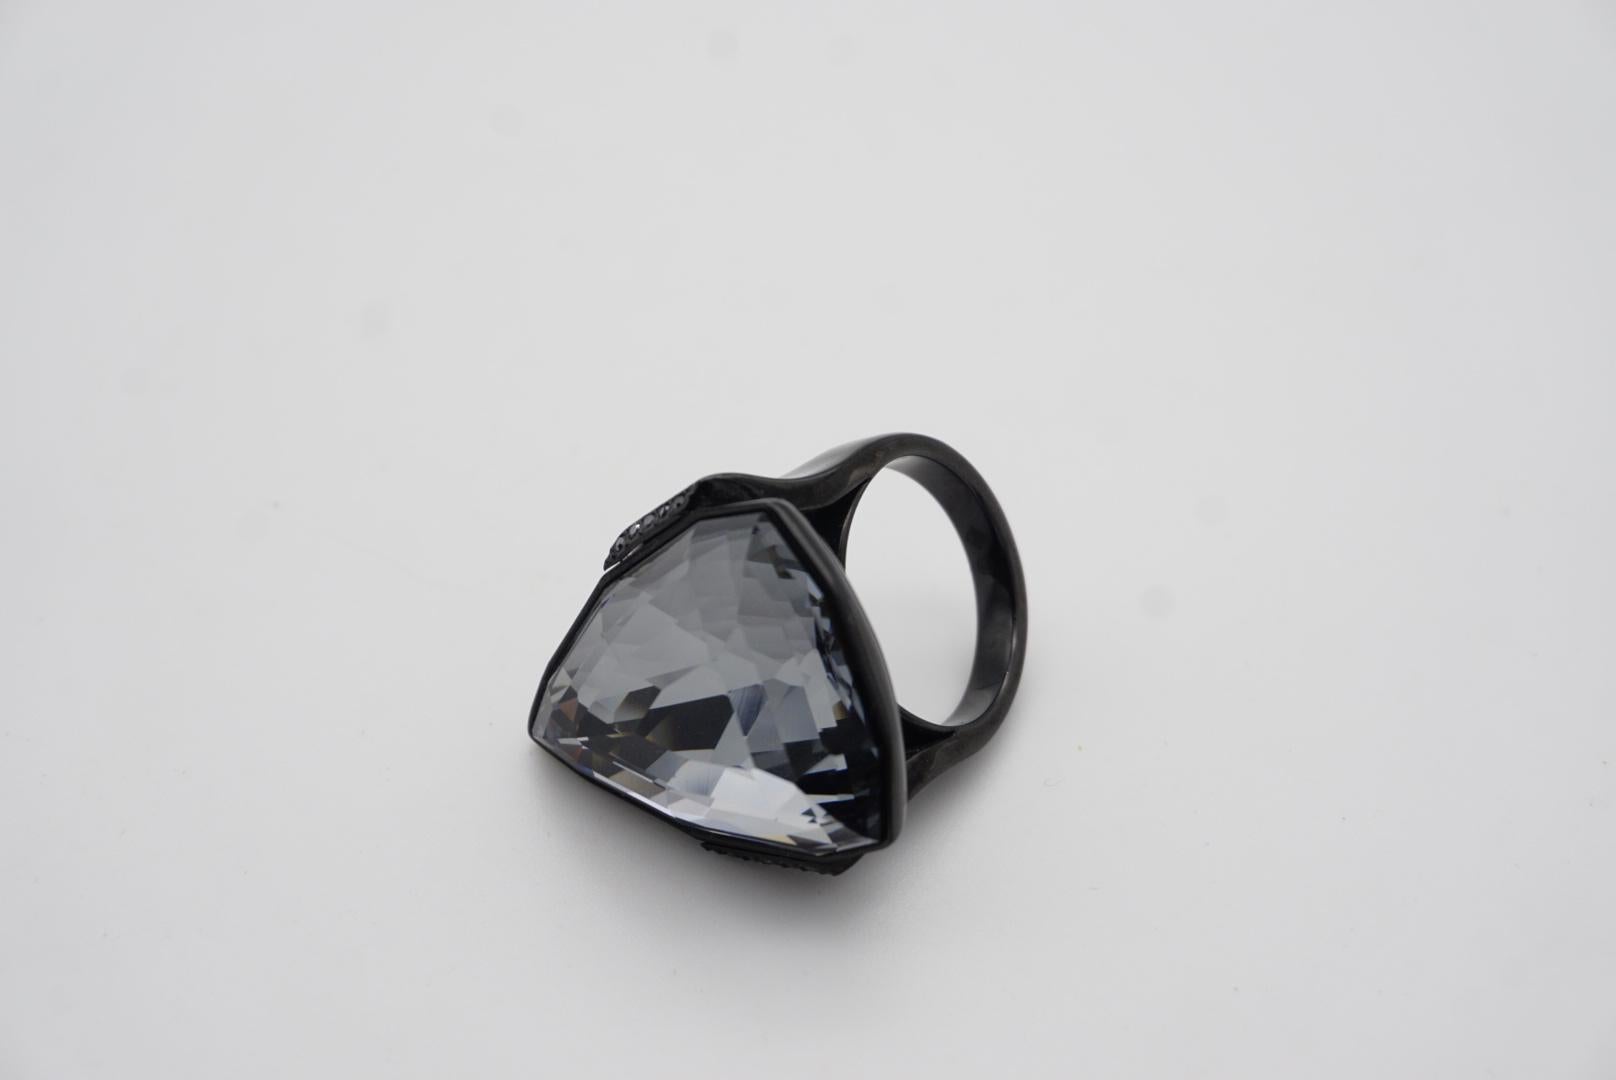 Swarovski Nirvana Triangle Crystals Black Curiosa Cocktail Ring, Size 55, UK N 1